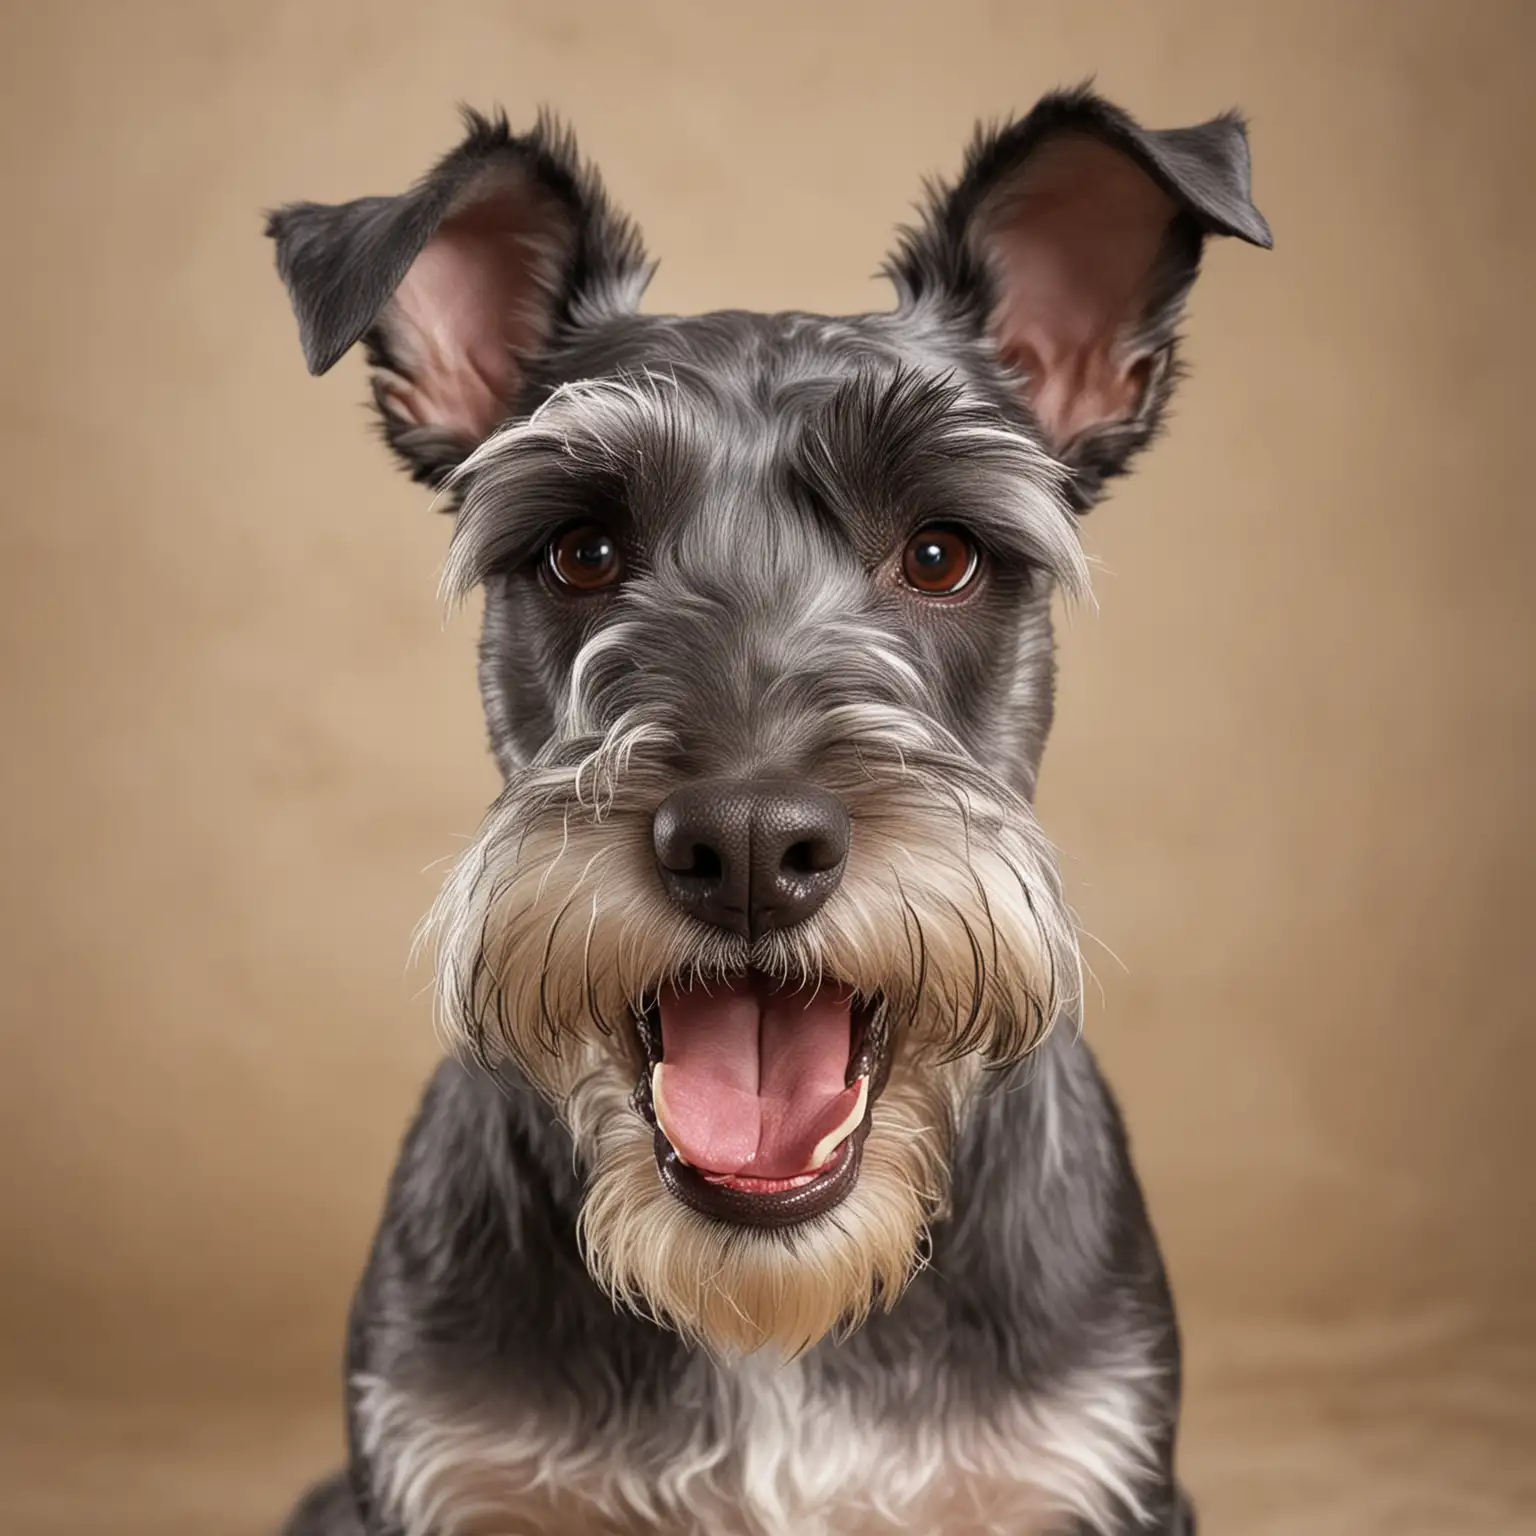 Schnauzer Dog Showing Teeth with Alert Expression